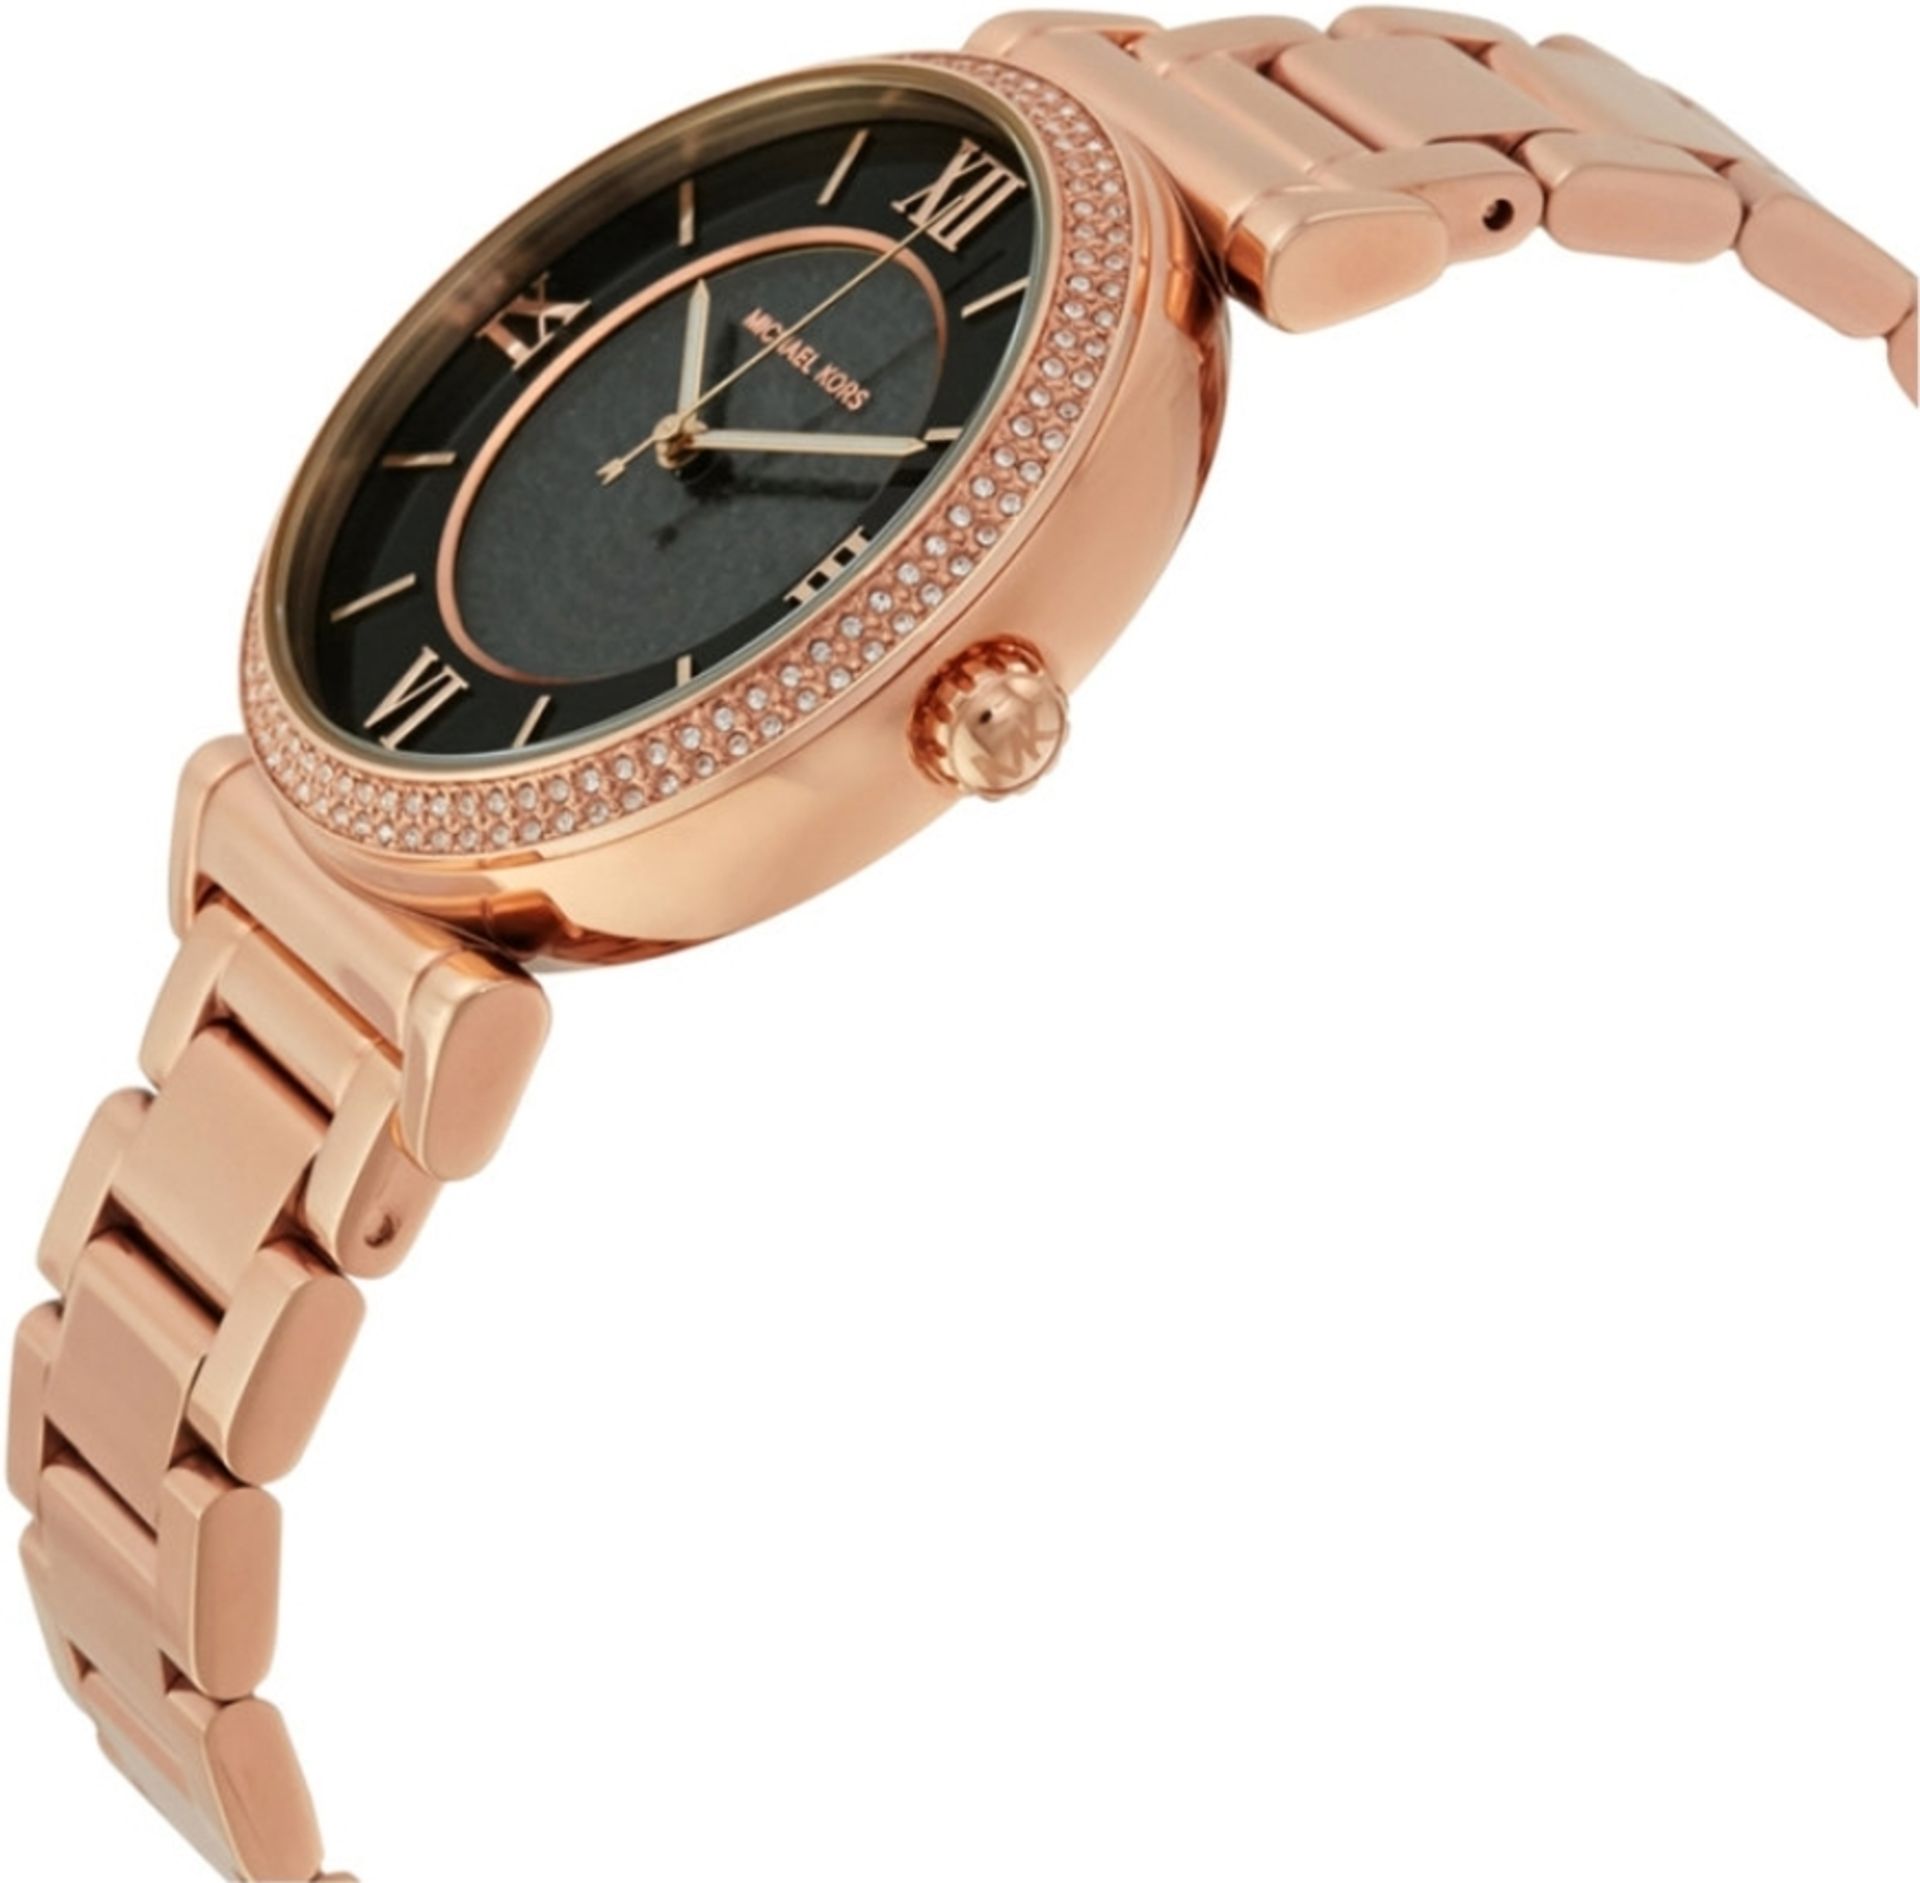 Michael Kors MK3356 Ladies Catlin Rose Gold Quartz Watch - Image 4 of 7